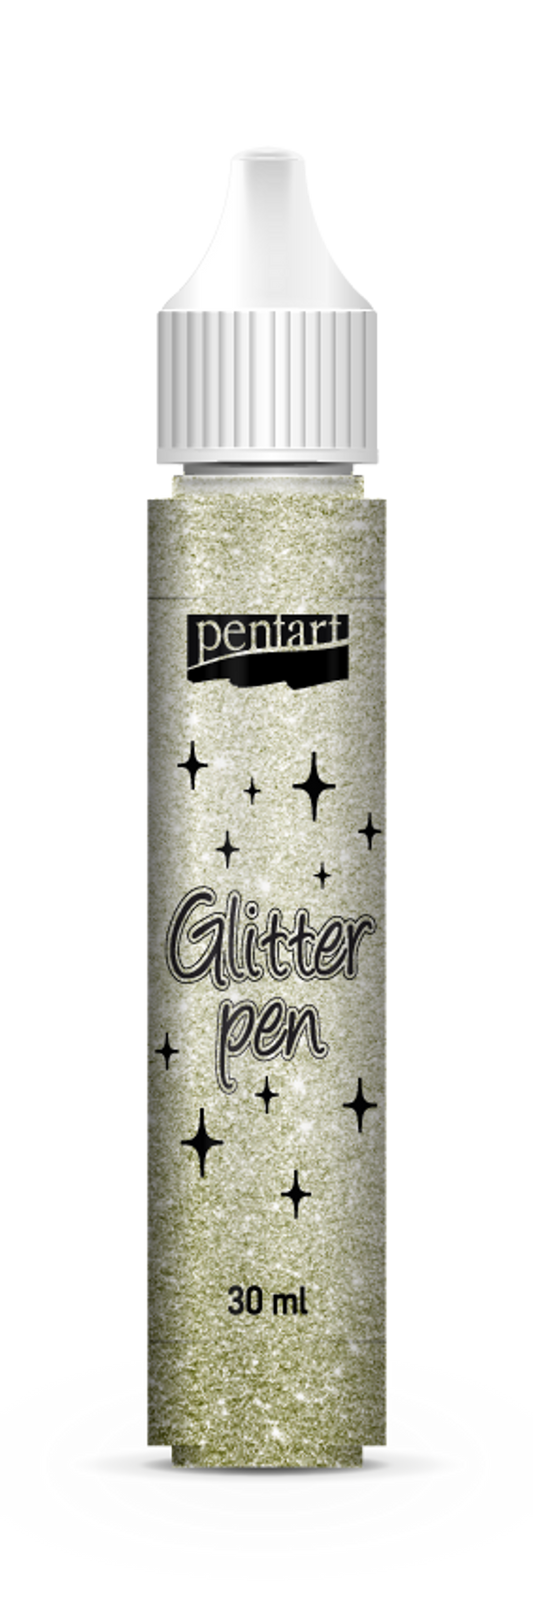 Glitter Pen - Decoupage Queen